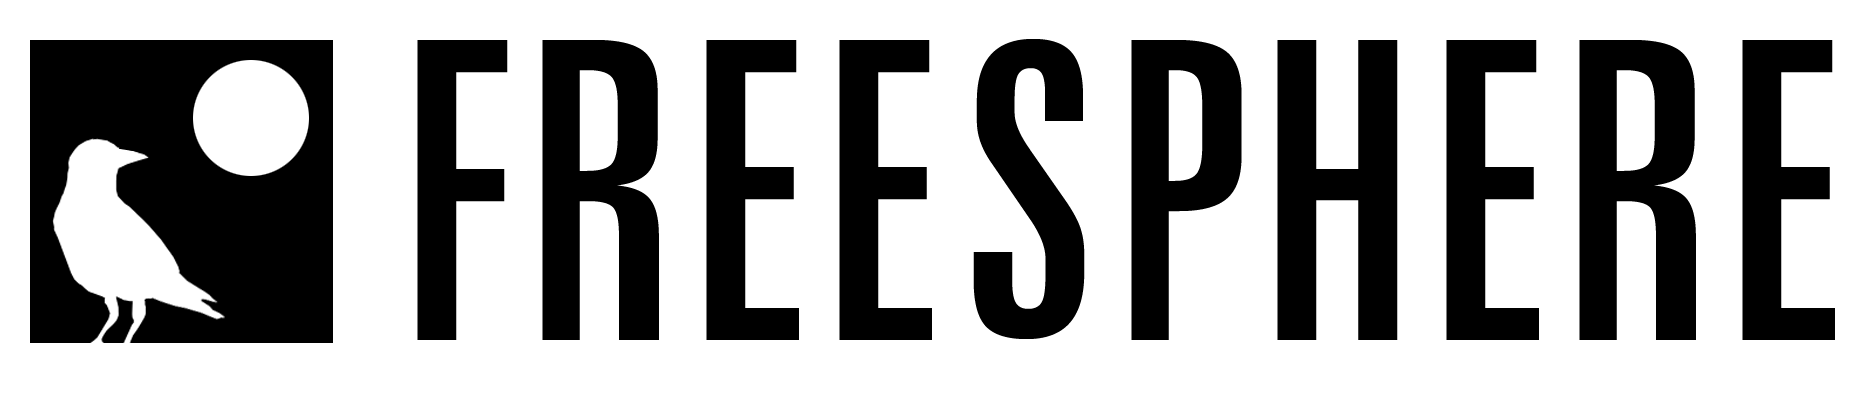 Freesphere logo